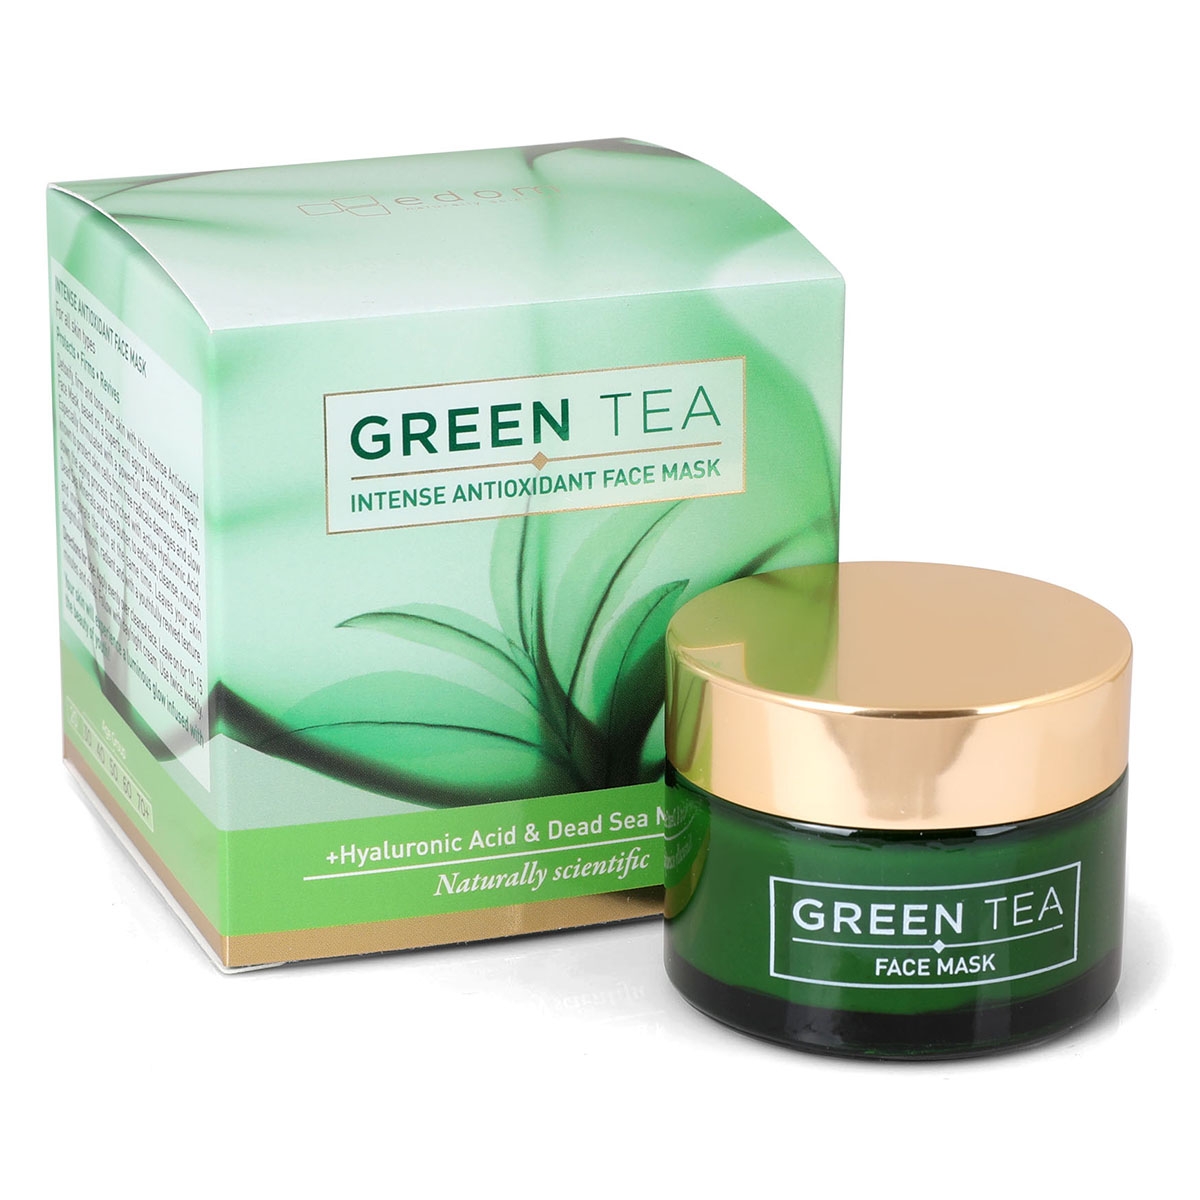 Edom Green Tea Intense Antioxidant Face Mask - 1